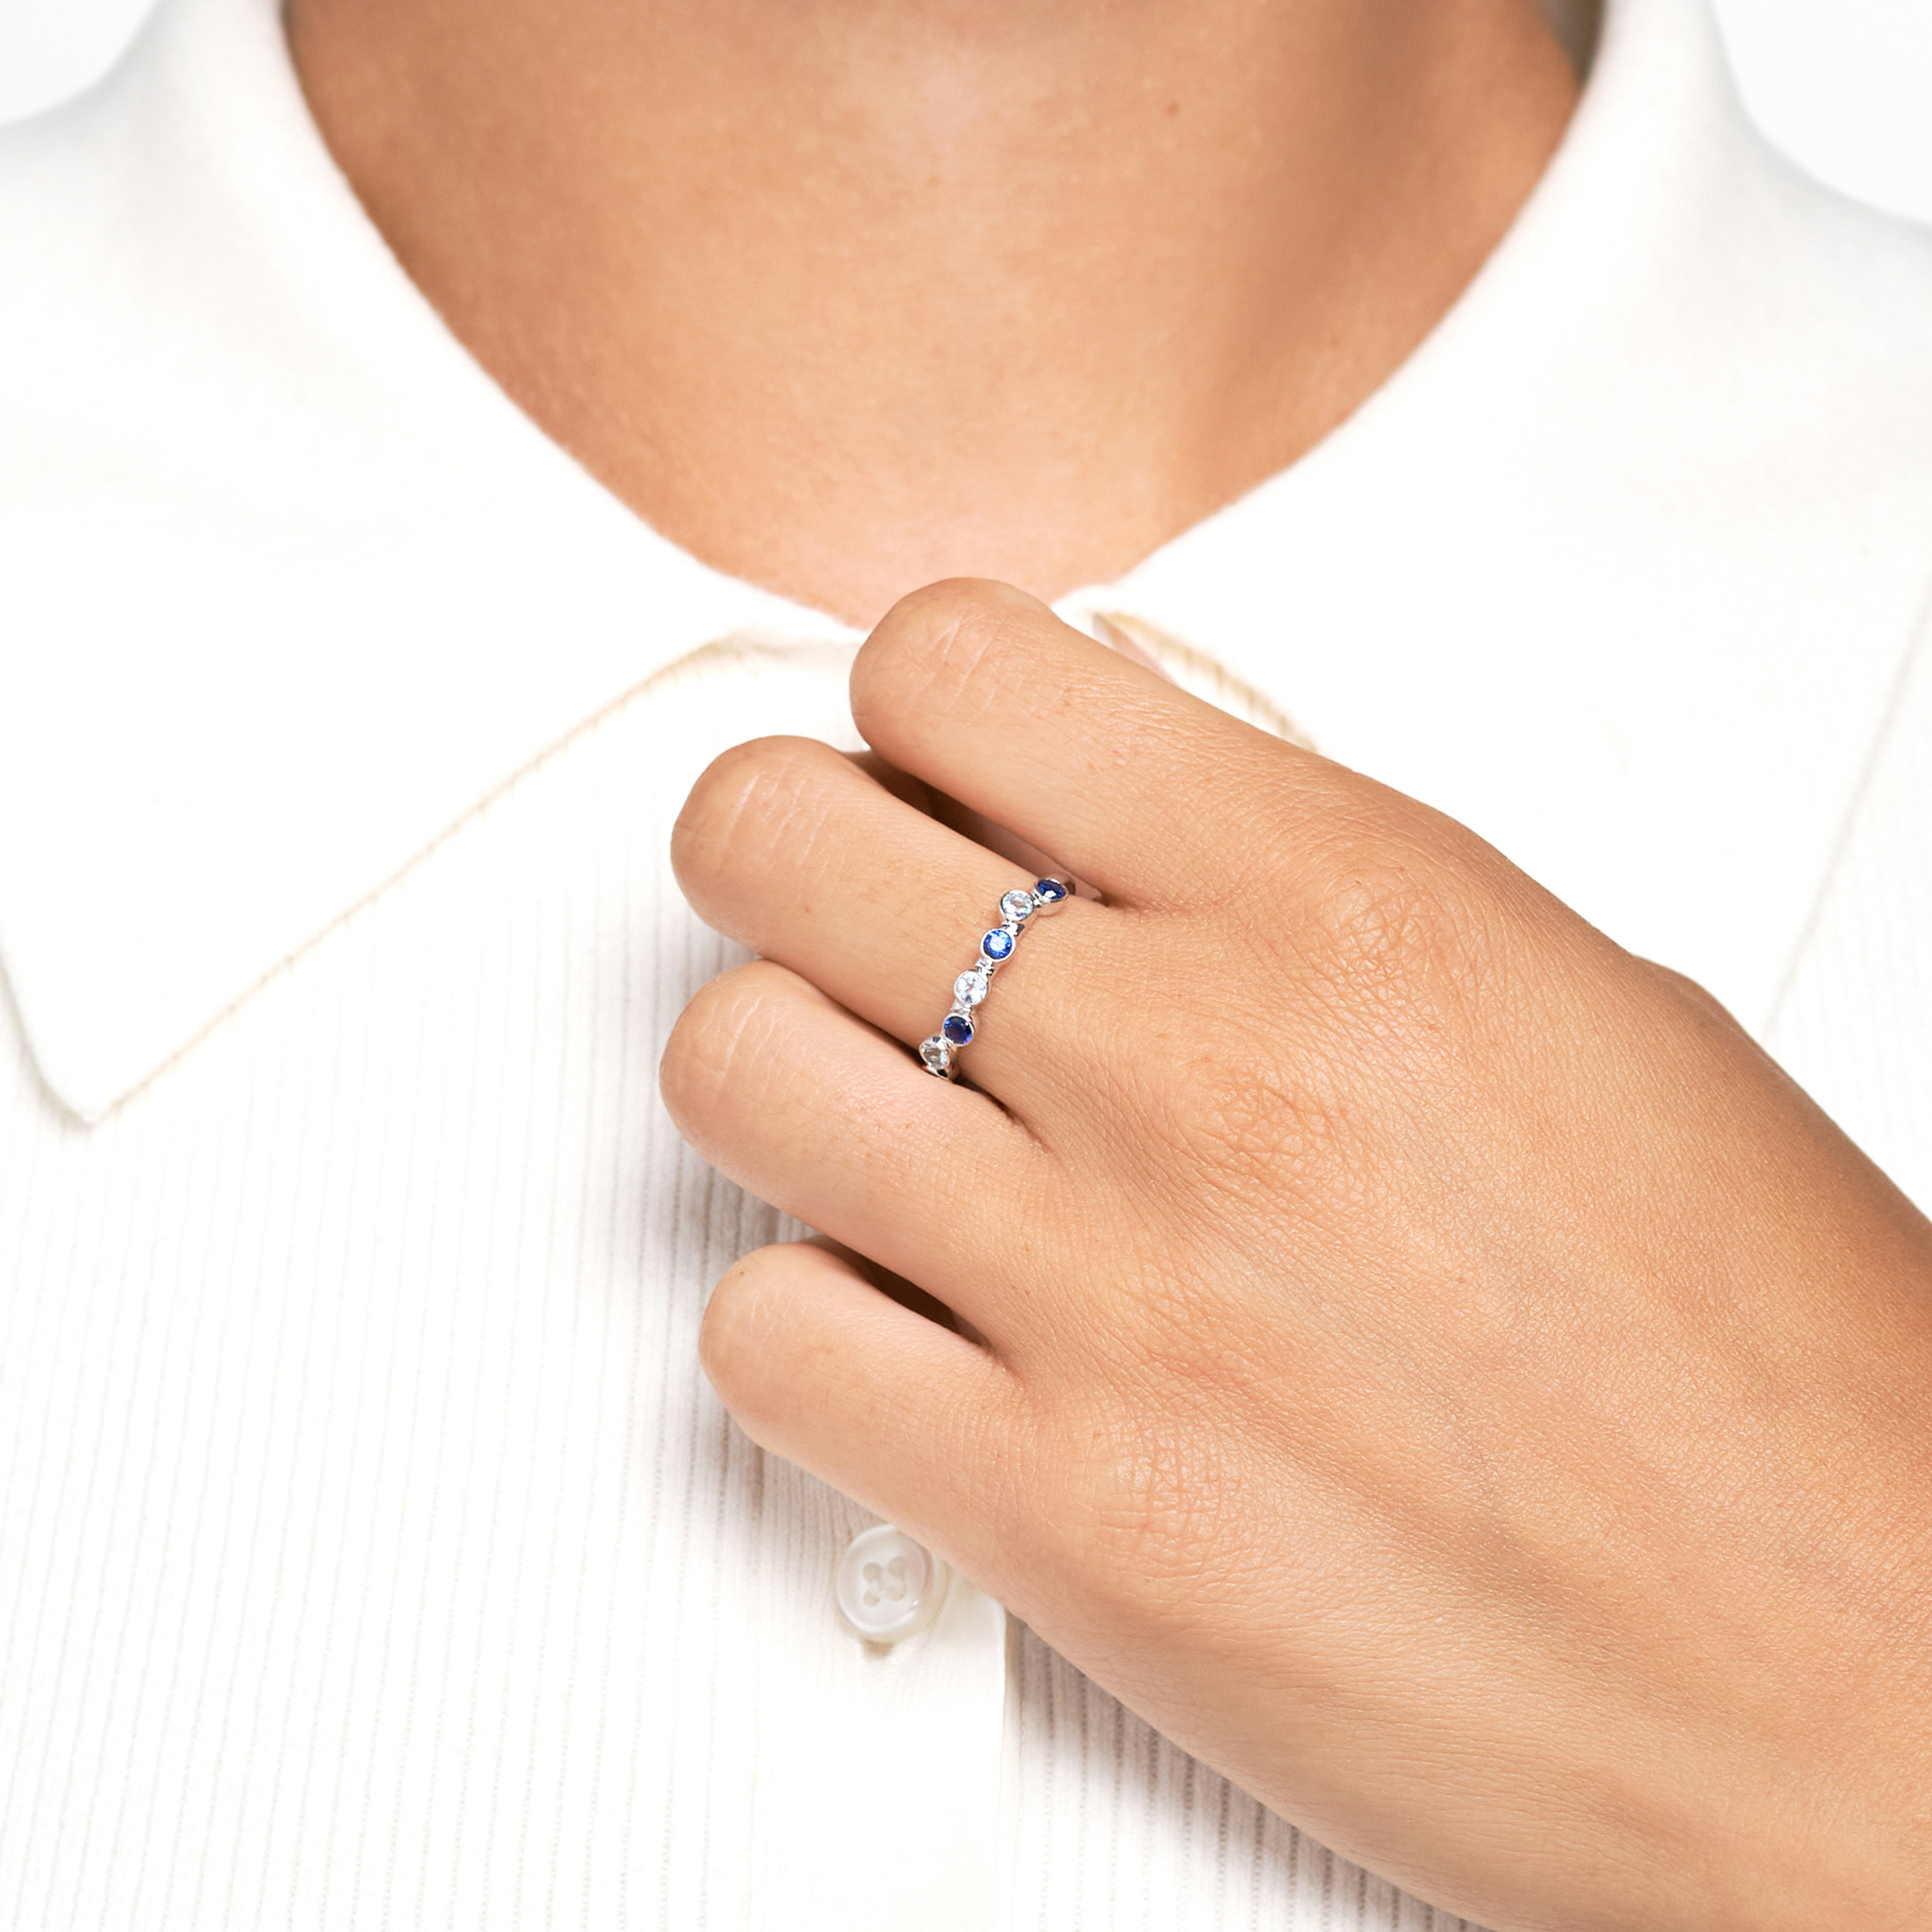 Juliette Maison Natural Garnet & Natural Blue Sapphire Ring 10K Rose Gold DYpzJQbJ